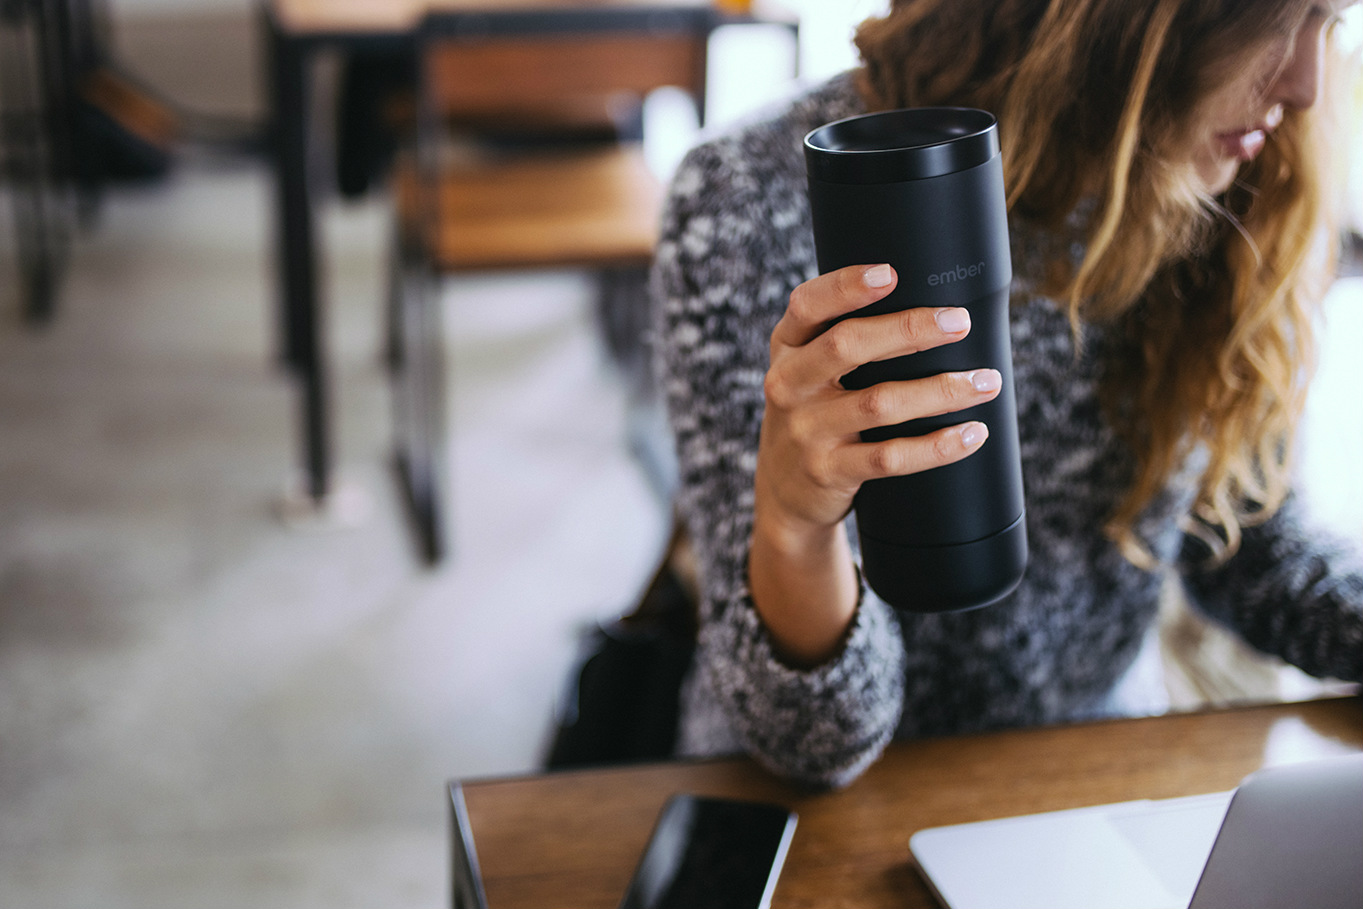 Ember Mug Review: The Smart Mug for Real Coffee Lovers - Futurism